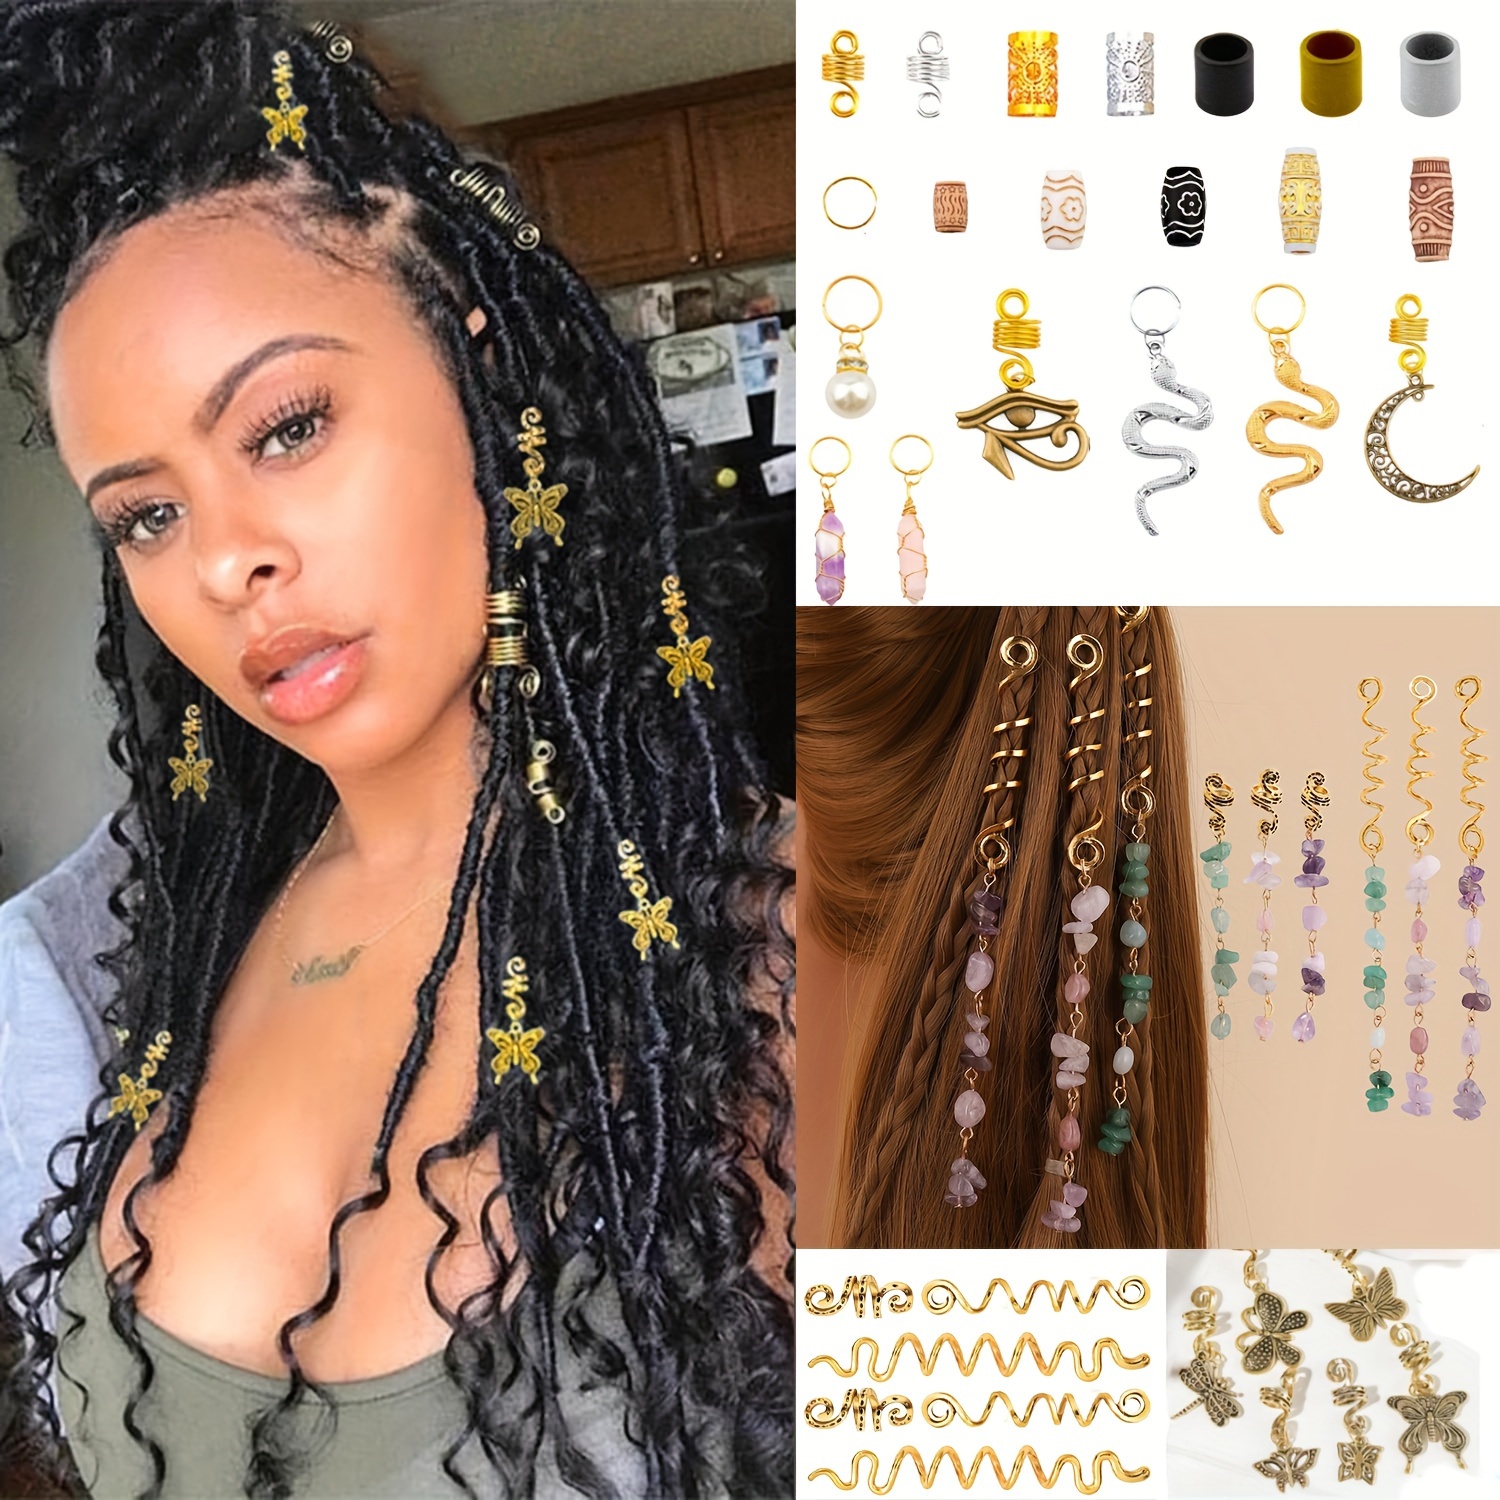 12 Styles Natural Stone Hair Dreadlock Beads Lock Jewelry Hair Accessories  1pc